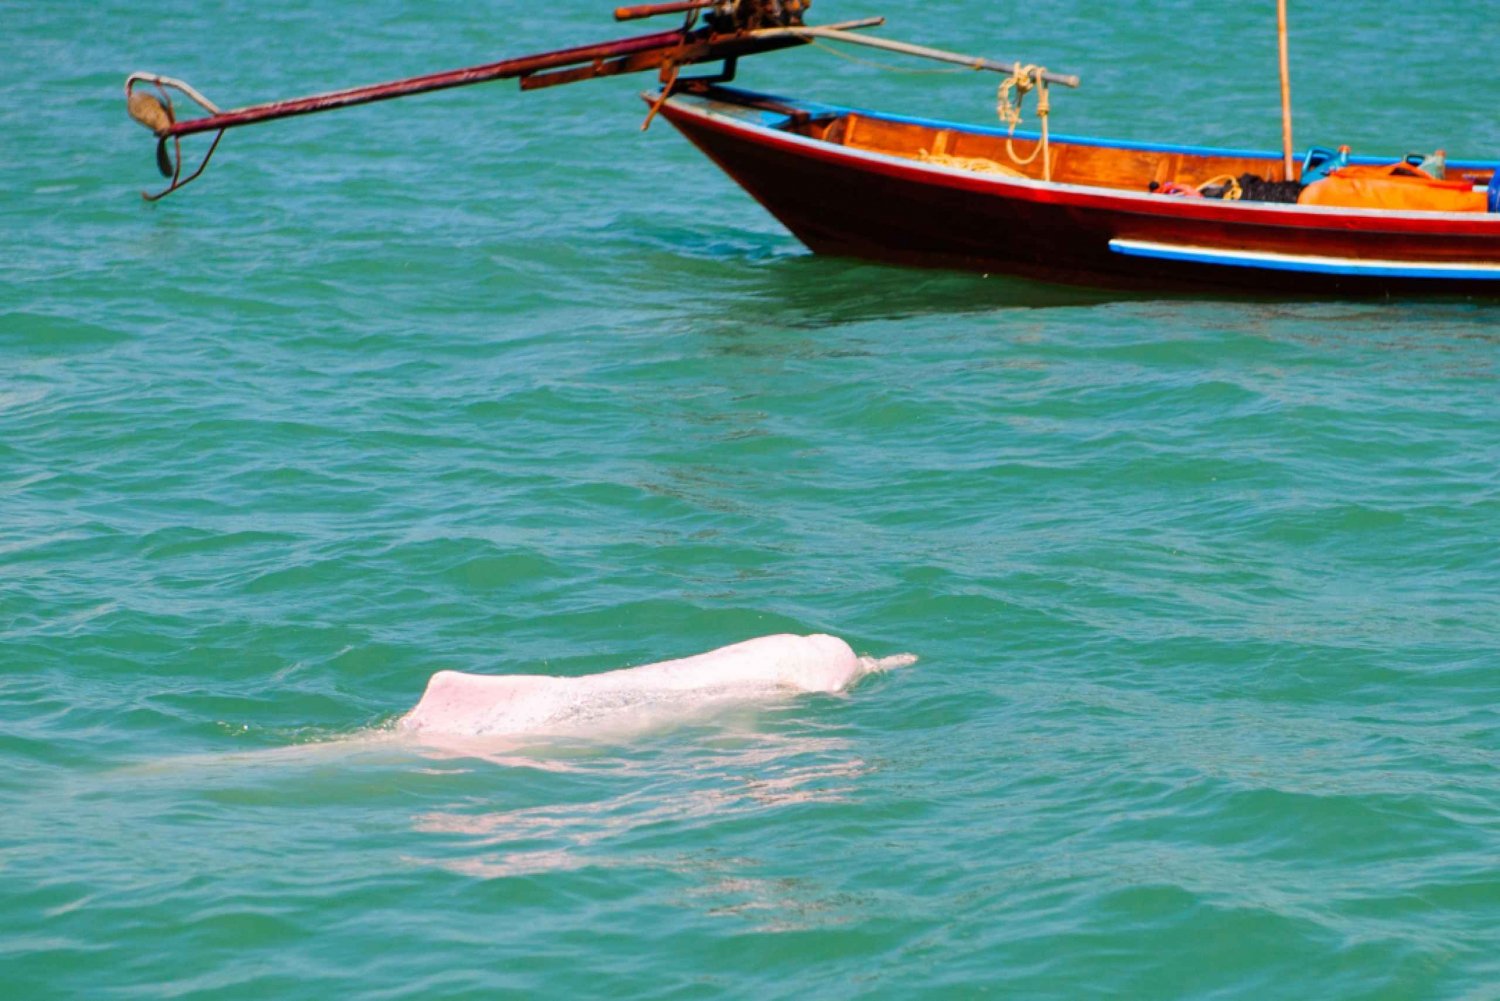 Koh Samui Roze Dolfijn sightseeingtour en snorkeltour